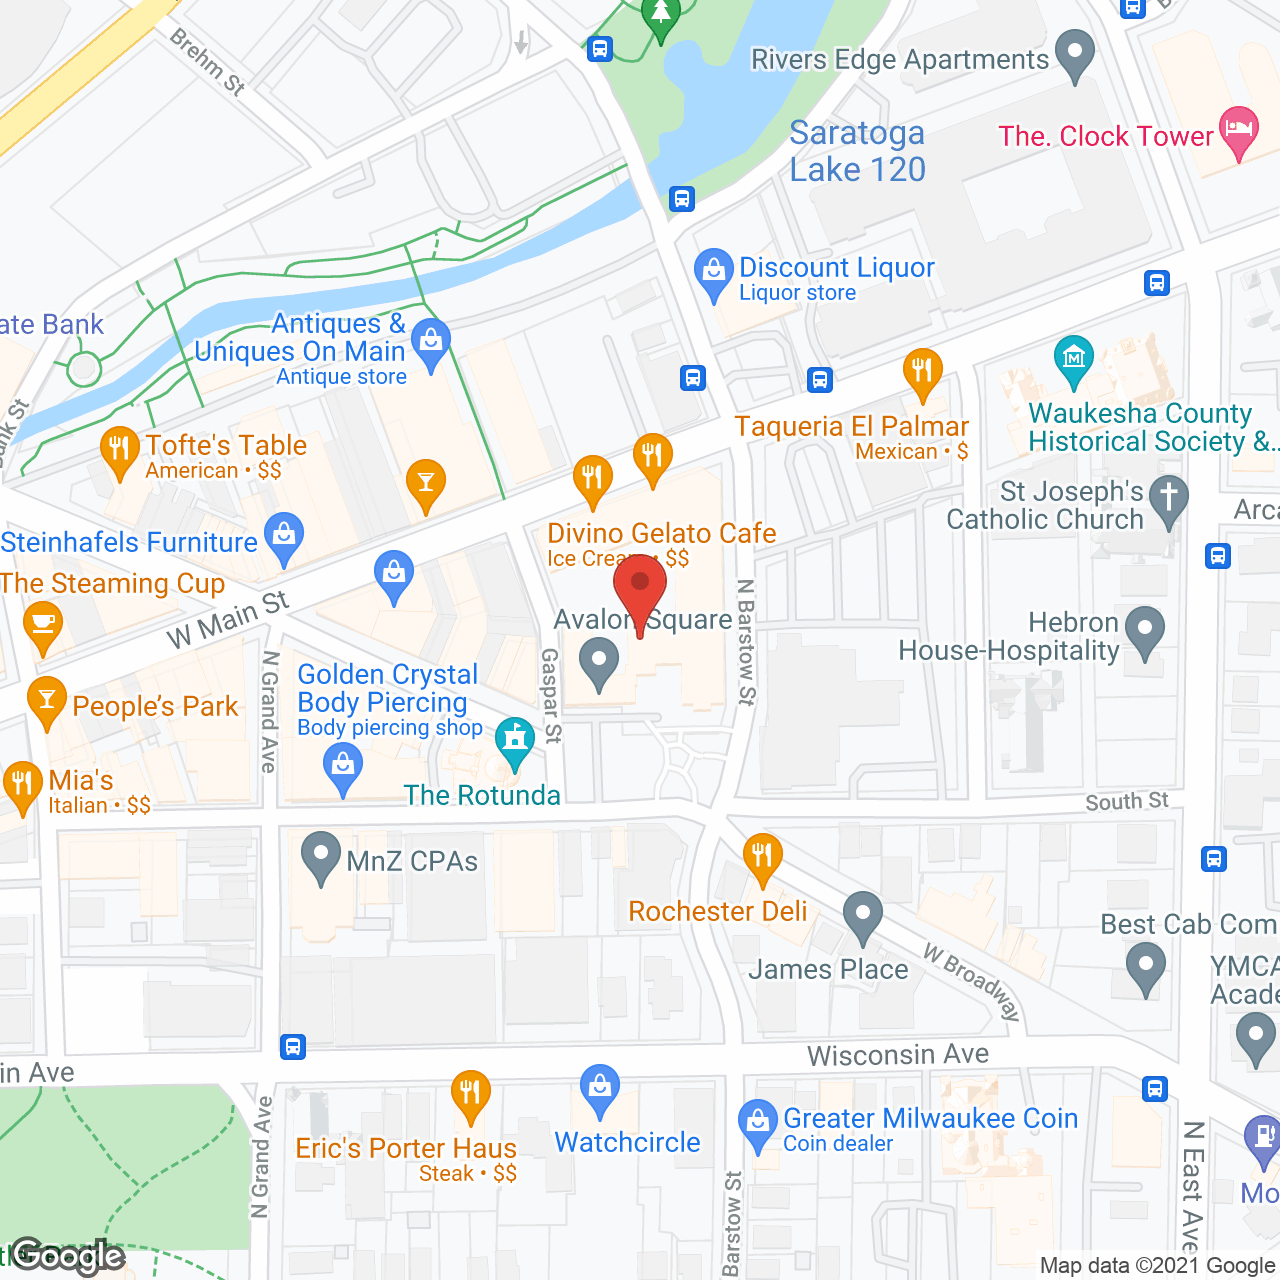 Avalon Square in google map